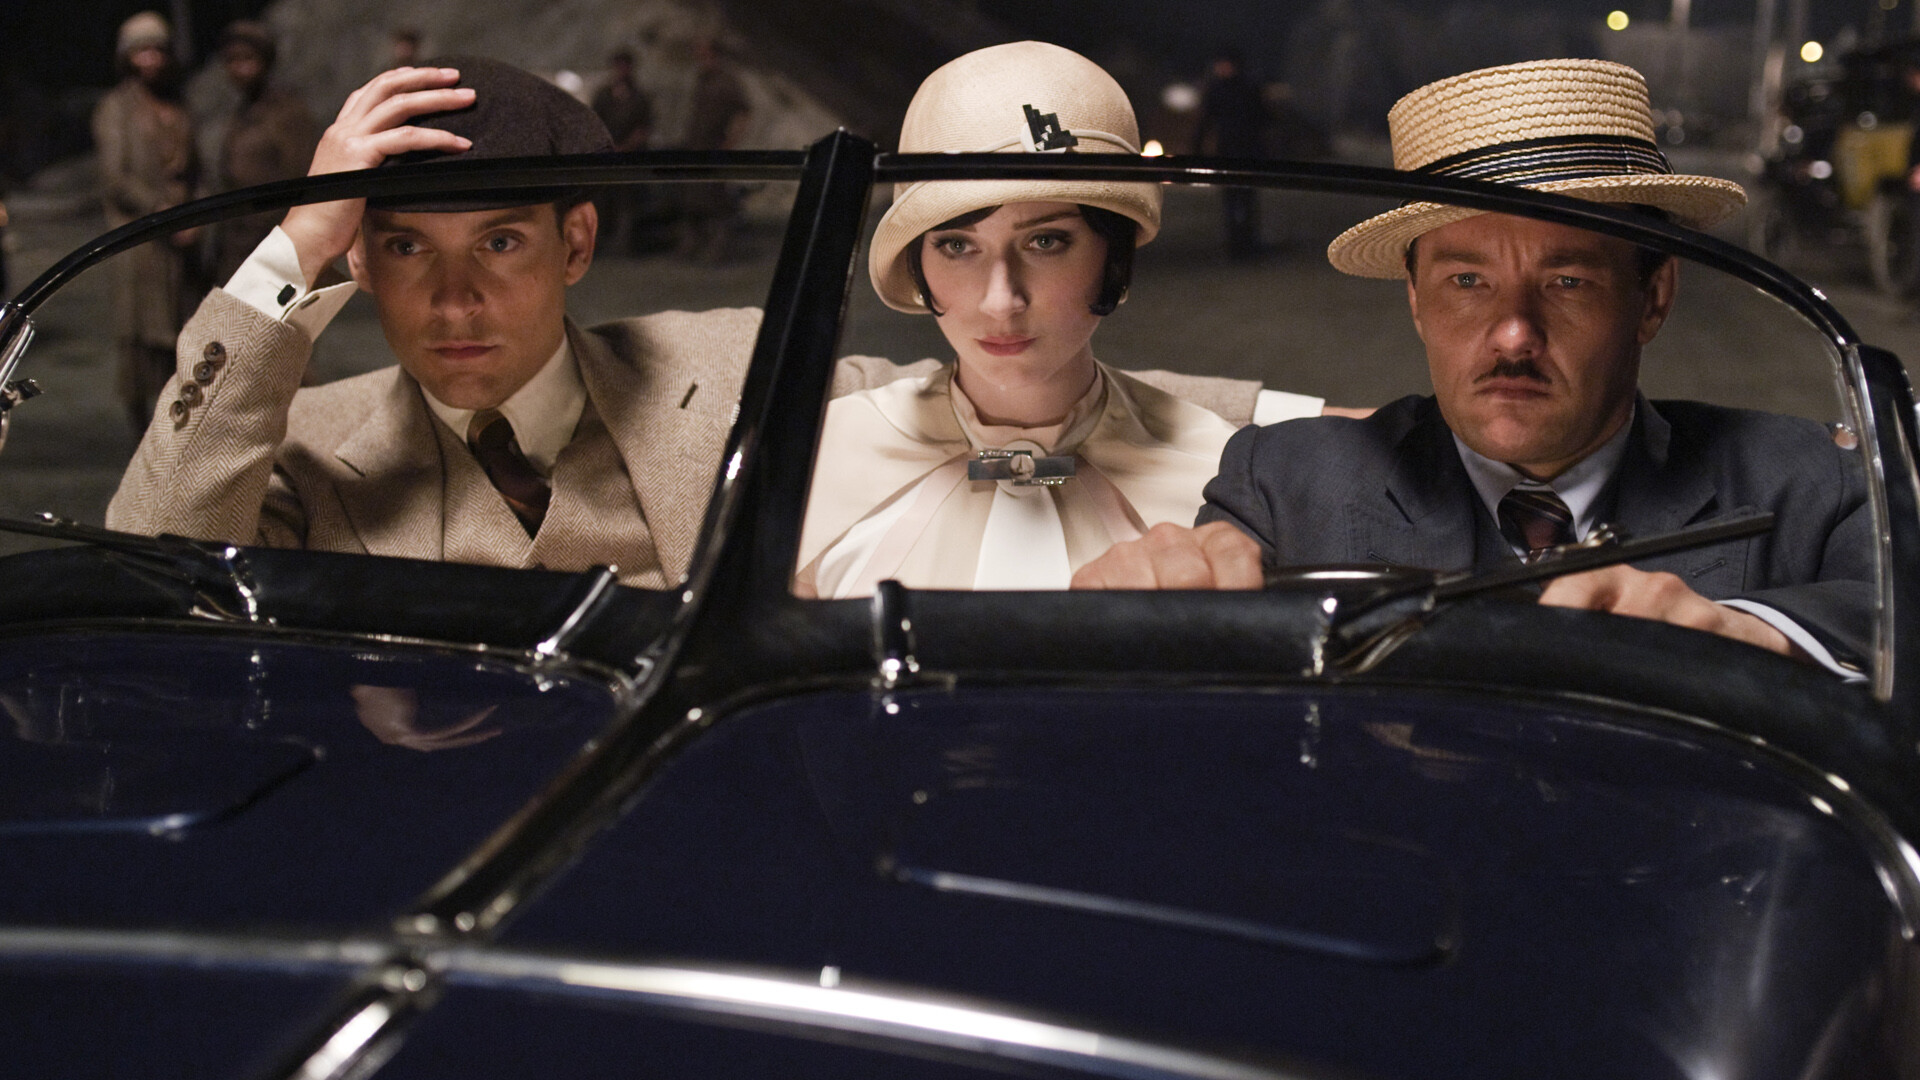 The Great Gatsby: Elizabeth Debicki, Joel Edgerton, Tobey Maguire, 2013 drama film. 1920x1080 Full HD Wallpaper.